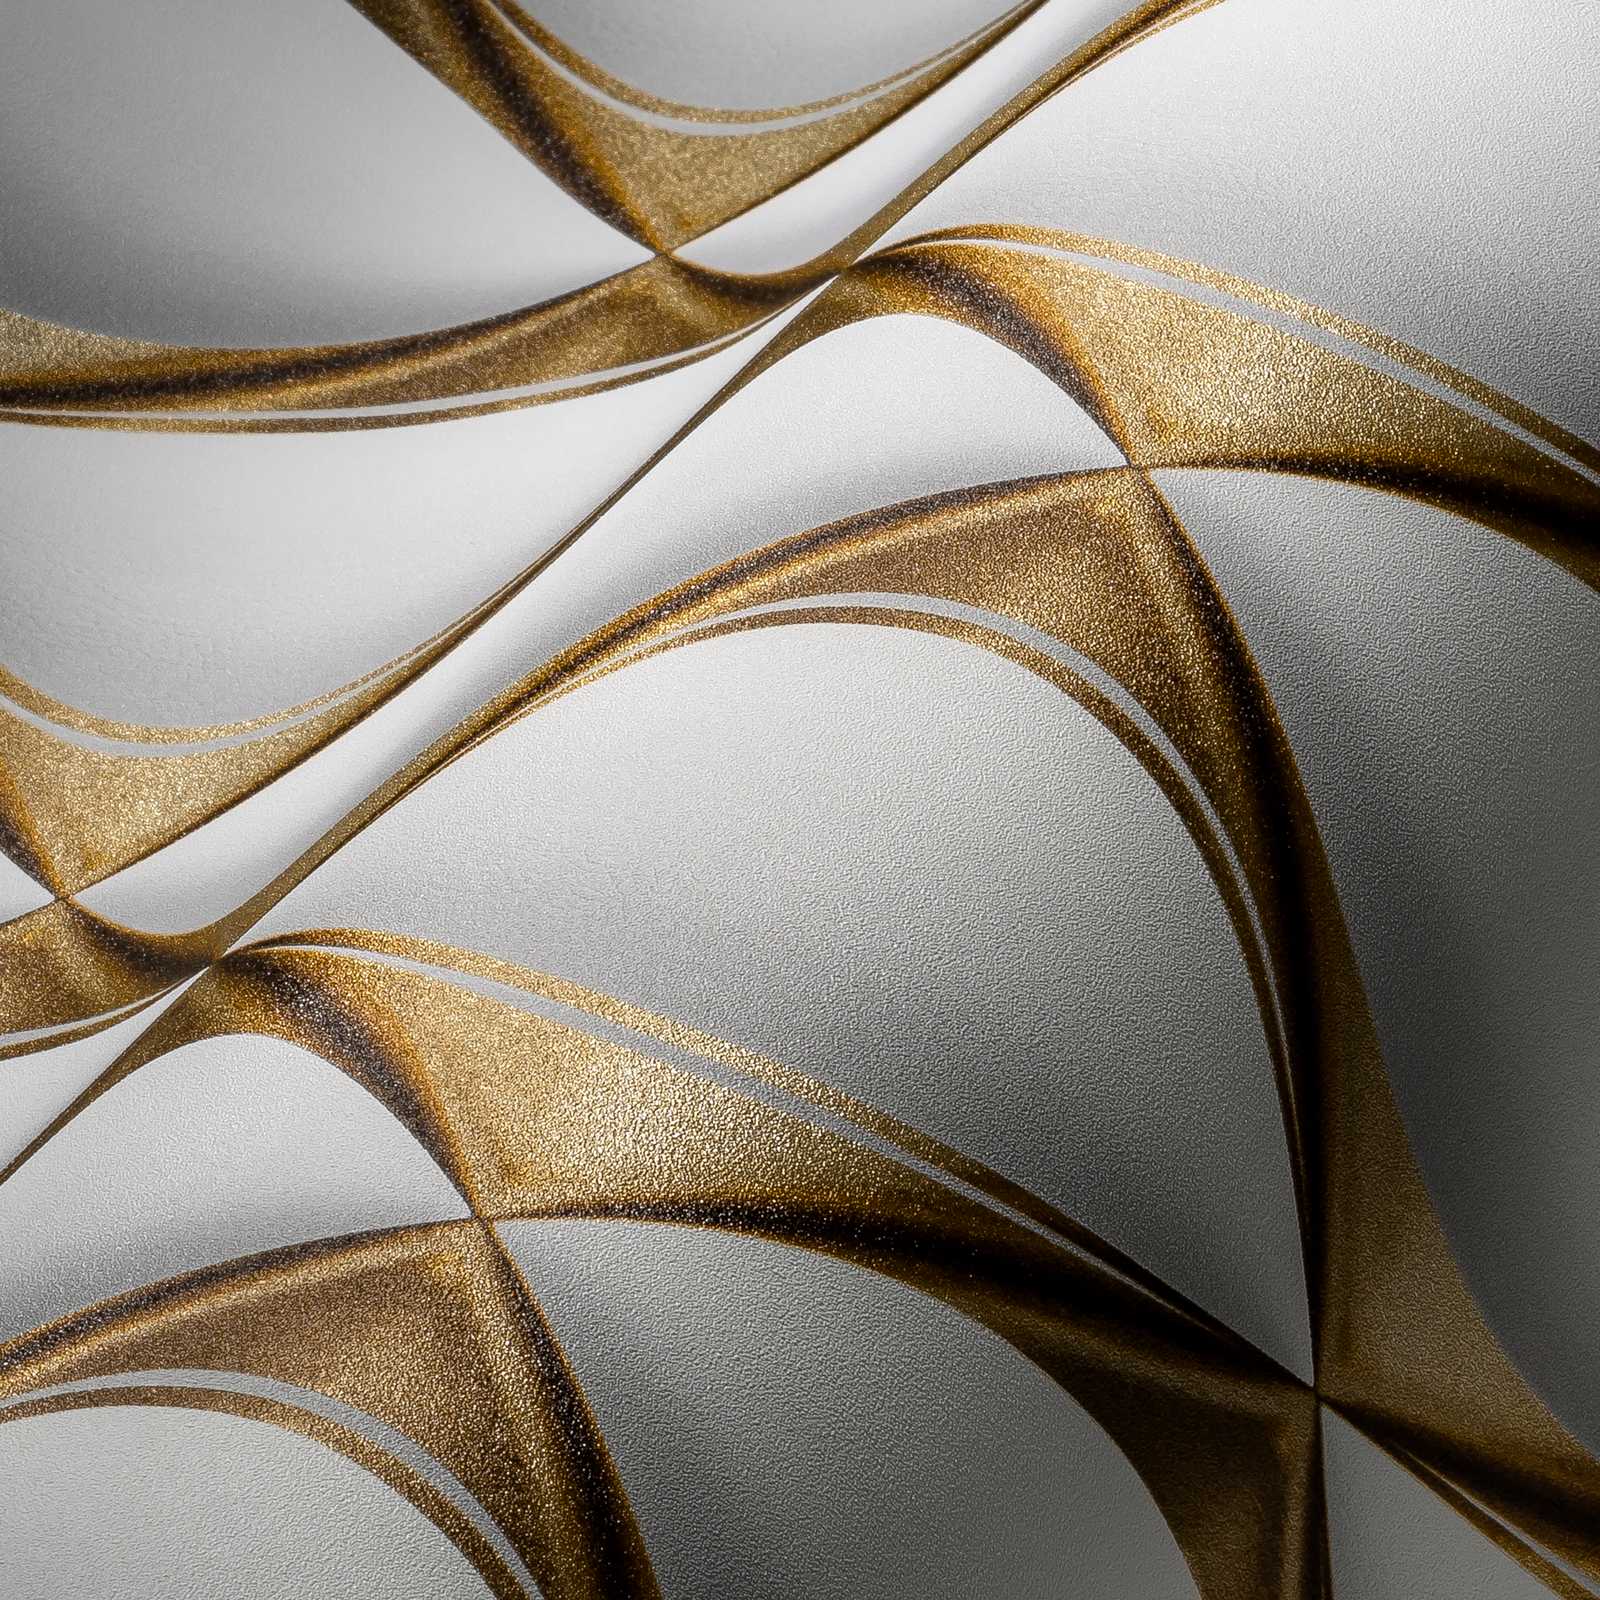             3D Tapete goldenes Retro Muster – Weiß, Grau, Metallic
        